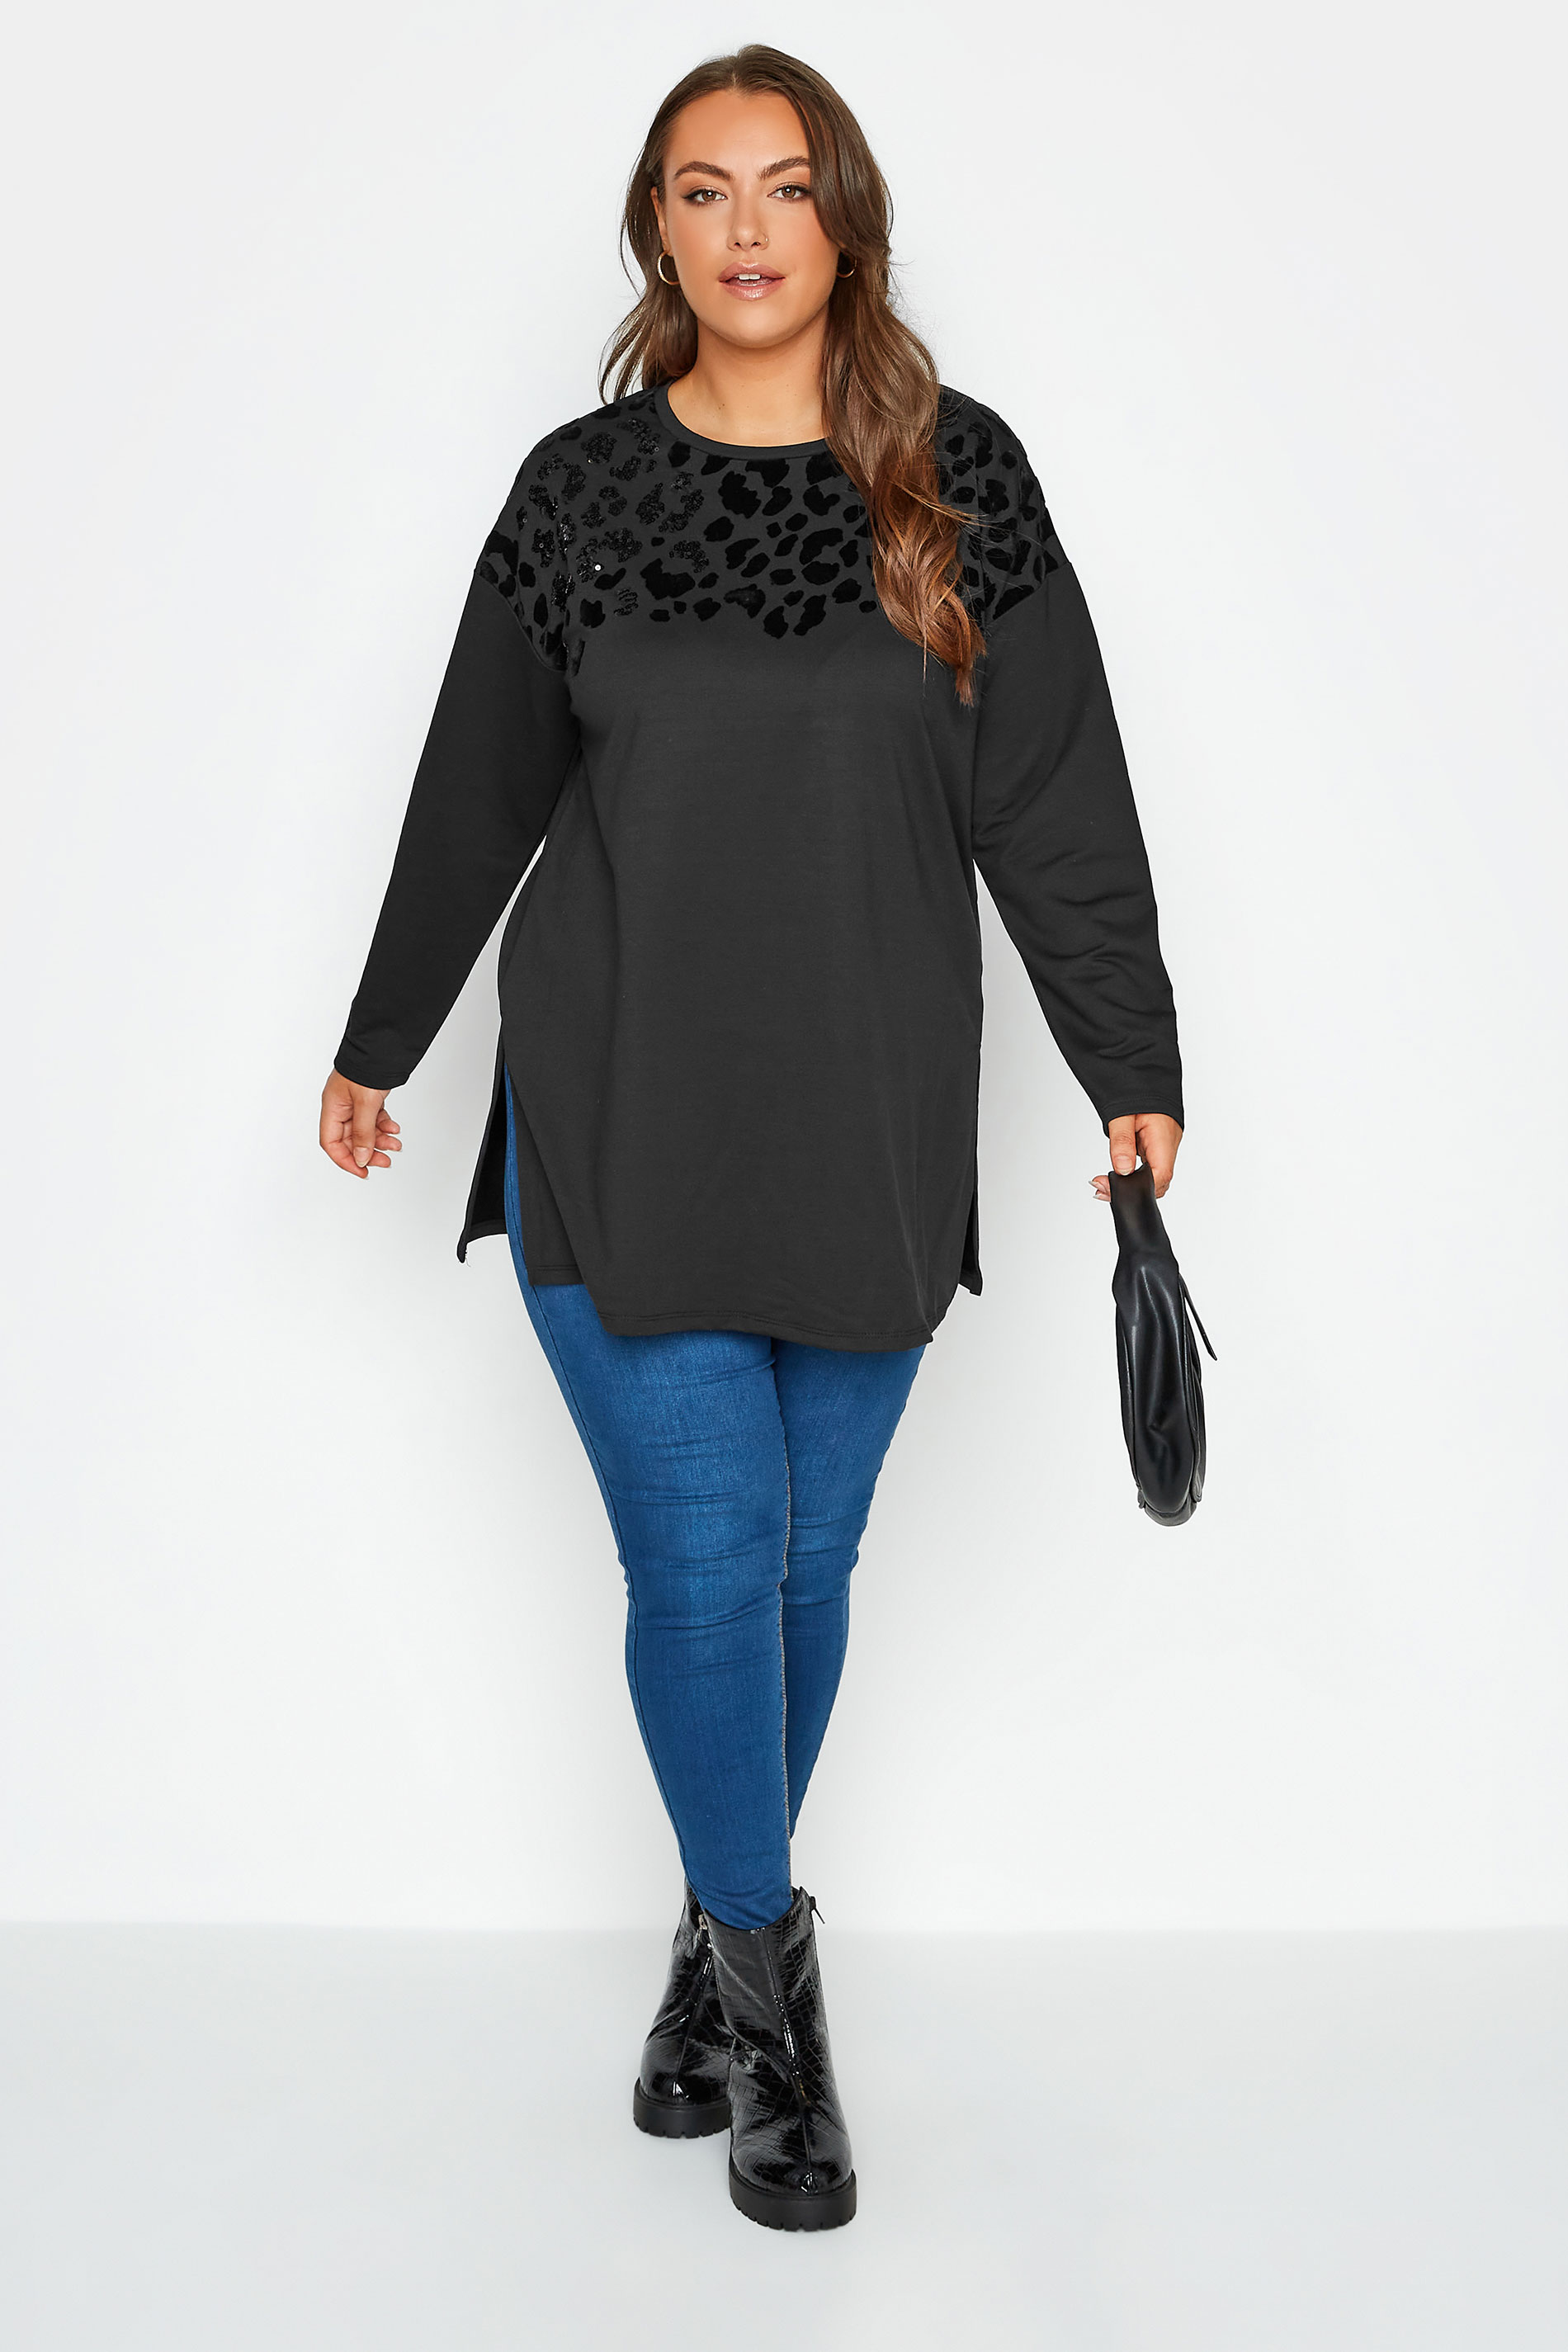 Plus Size Black Sequin Velvet Leopard Print Jumper | Yours Clothing 2